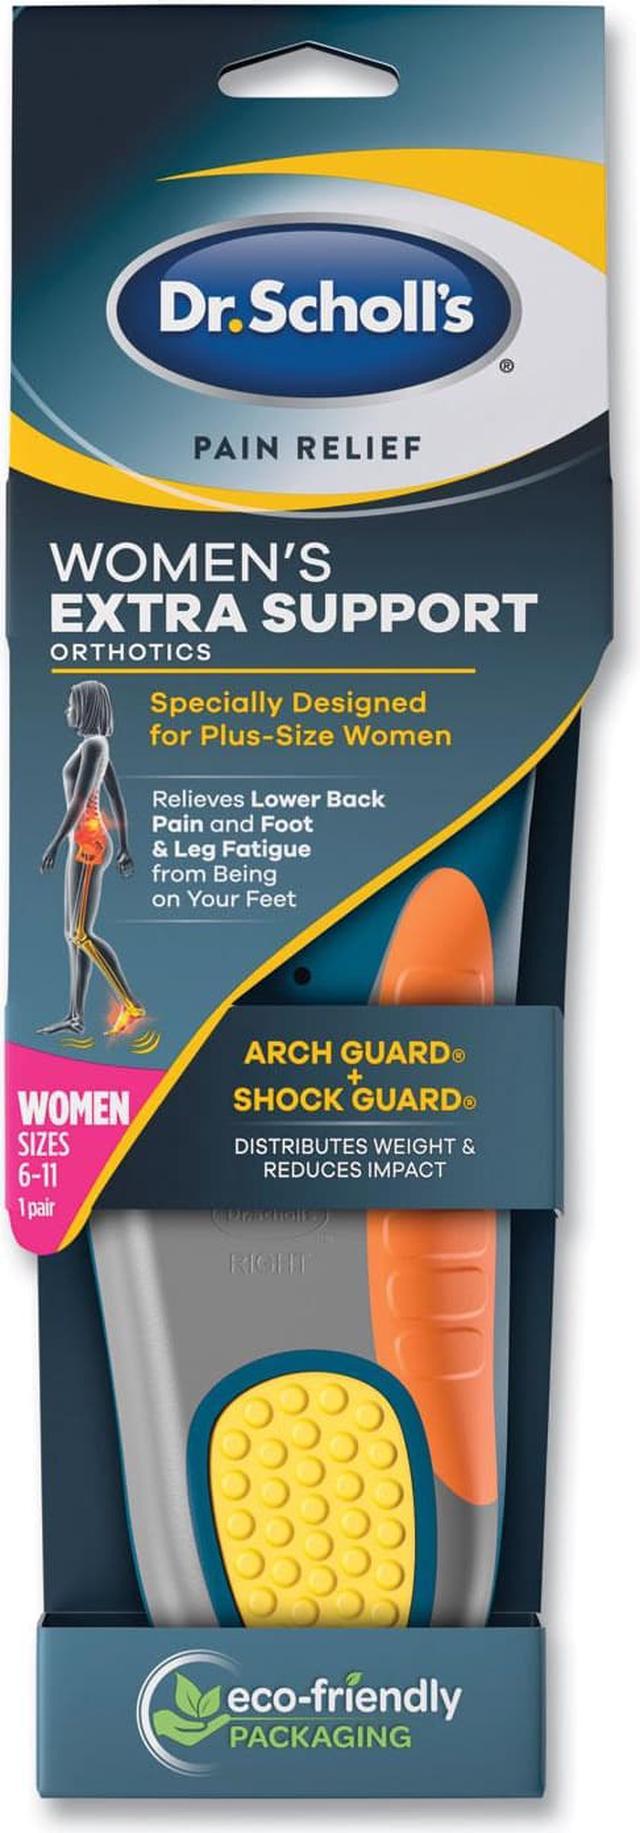 Women's Extra Support Orthotics